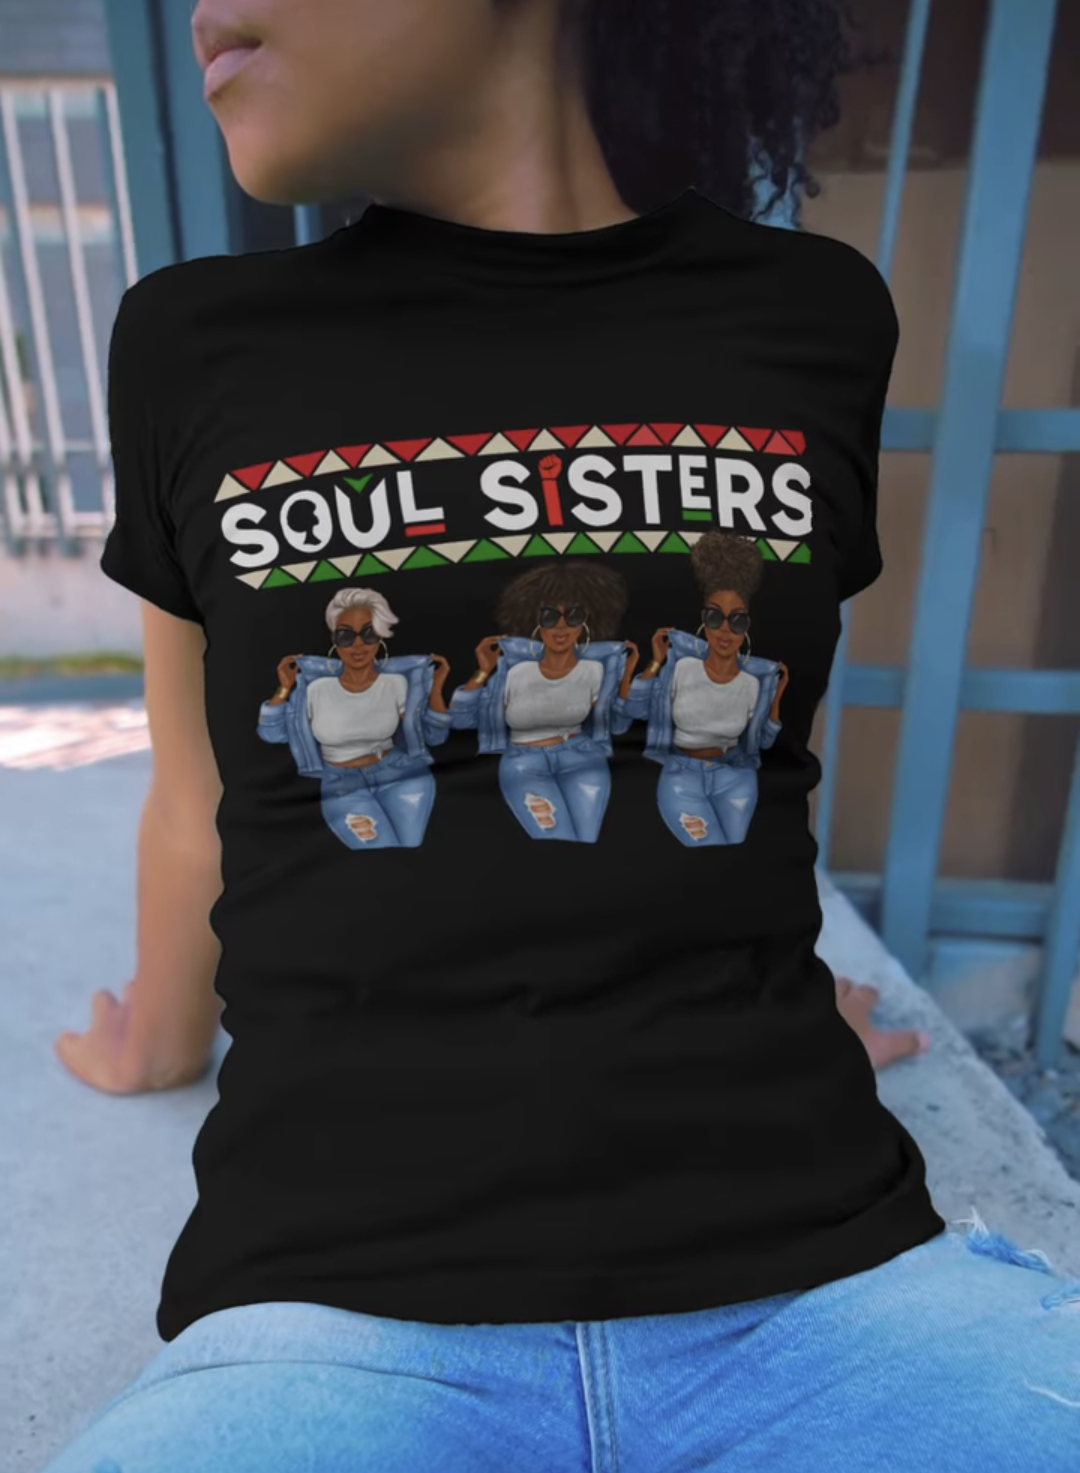 Soul Sisters DTF Transfer - white tshirts